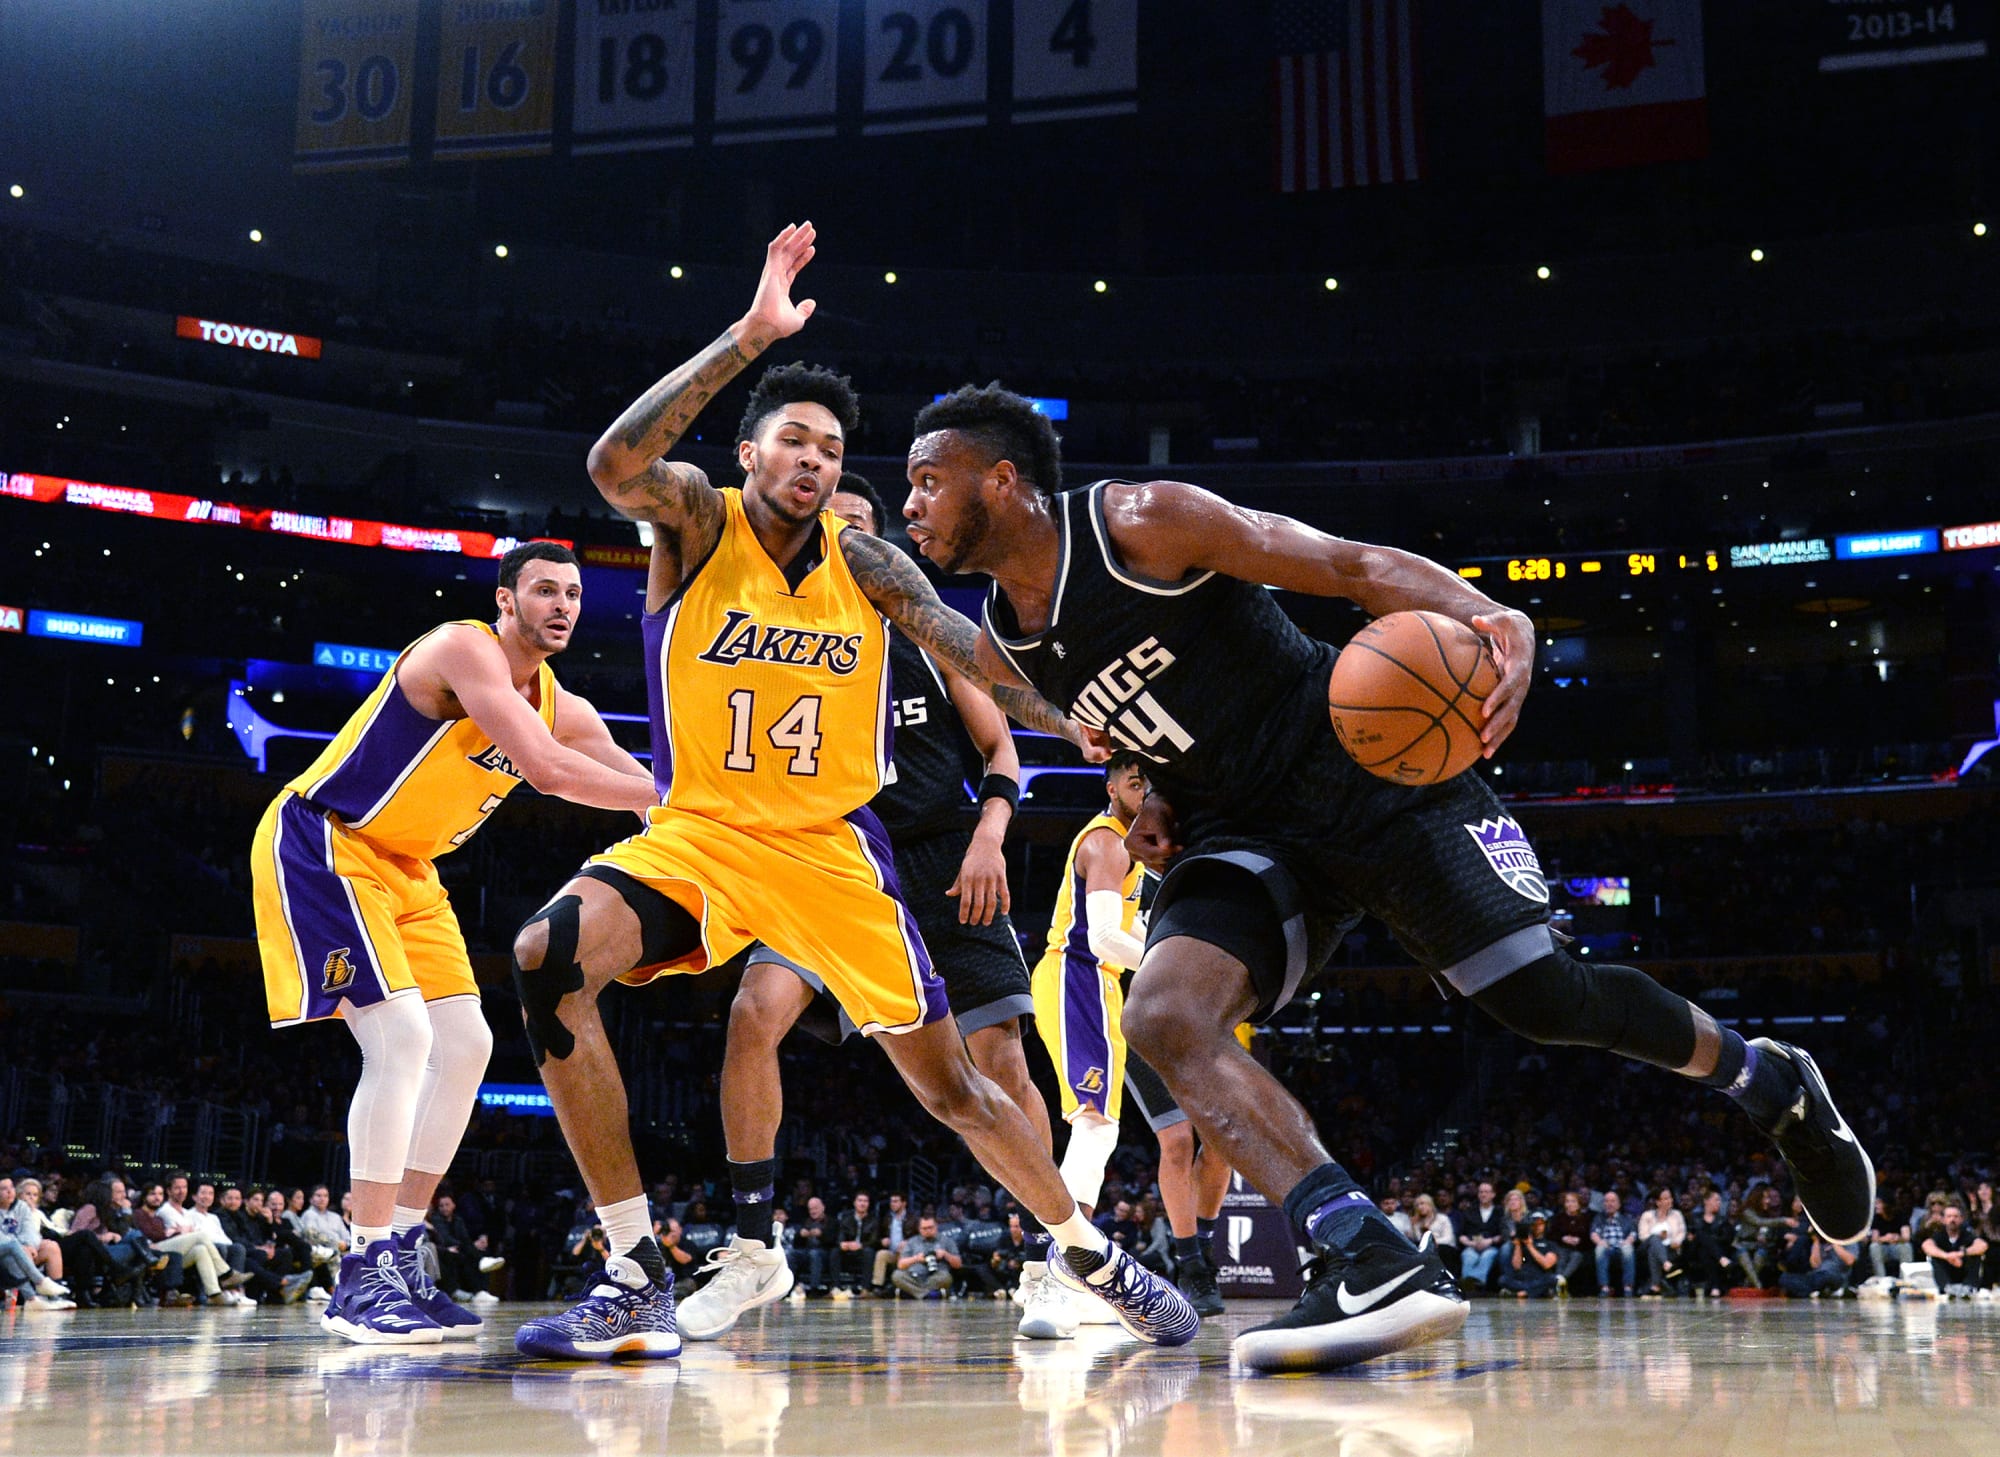 Sacramento Kings vs Los Angeles Lakers preseason game: How to watch